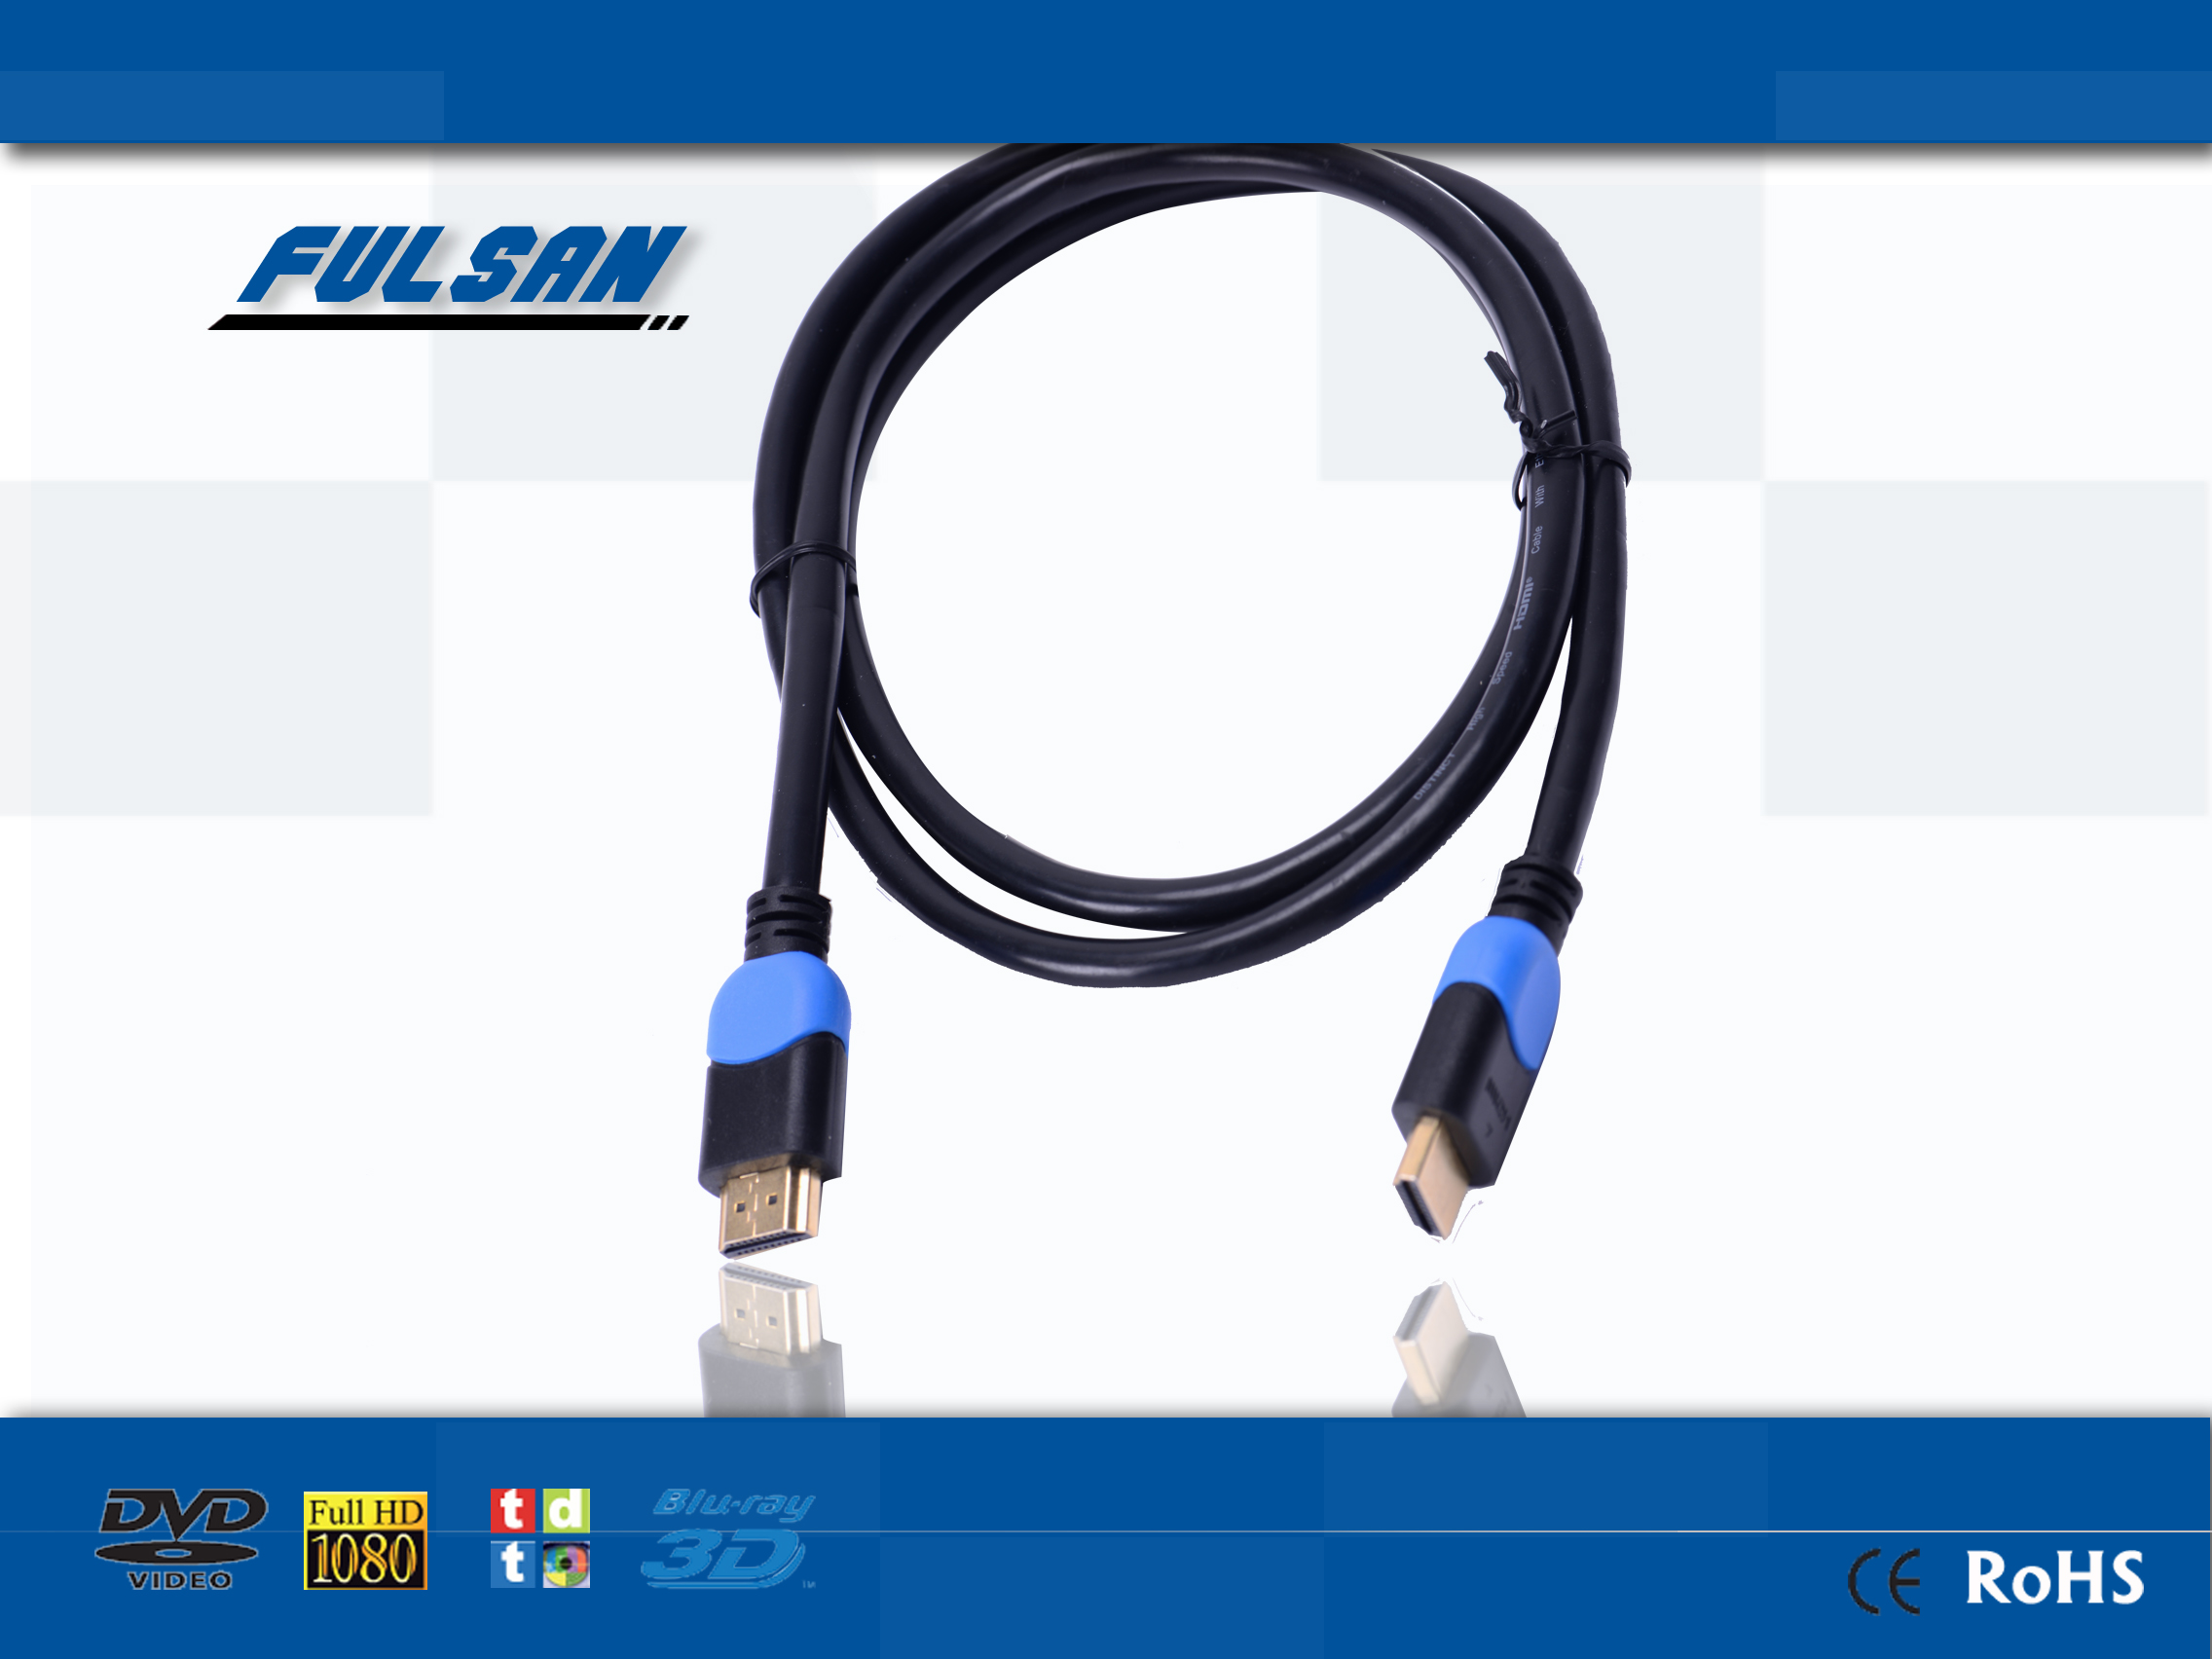 Fiber Optic HDMI Cable Support 4k@60Hz 3D 4:4:4 Full 18Gbps HDR ARC Ps4 Xbox 1m,2m,3m,5m,10m,15m,20m,30m,40m,50m,100m 